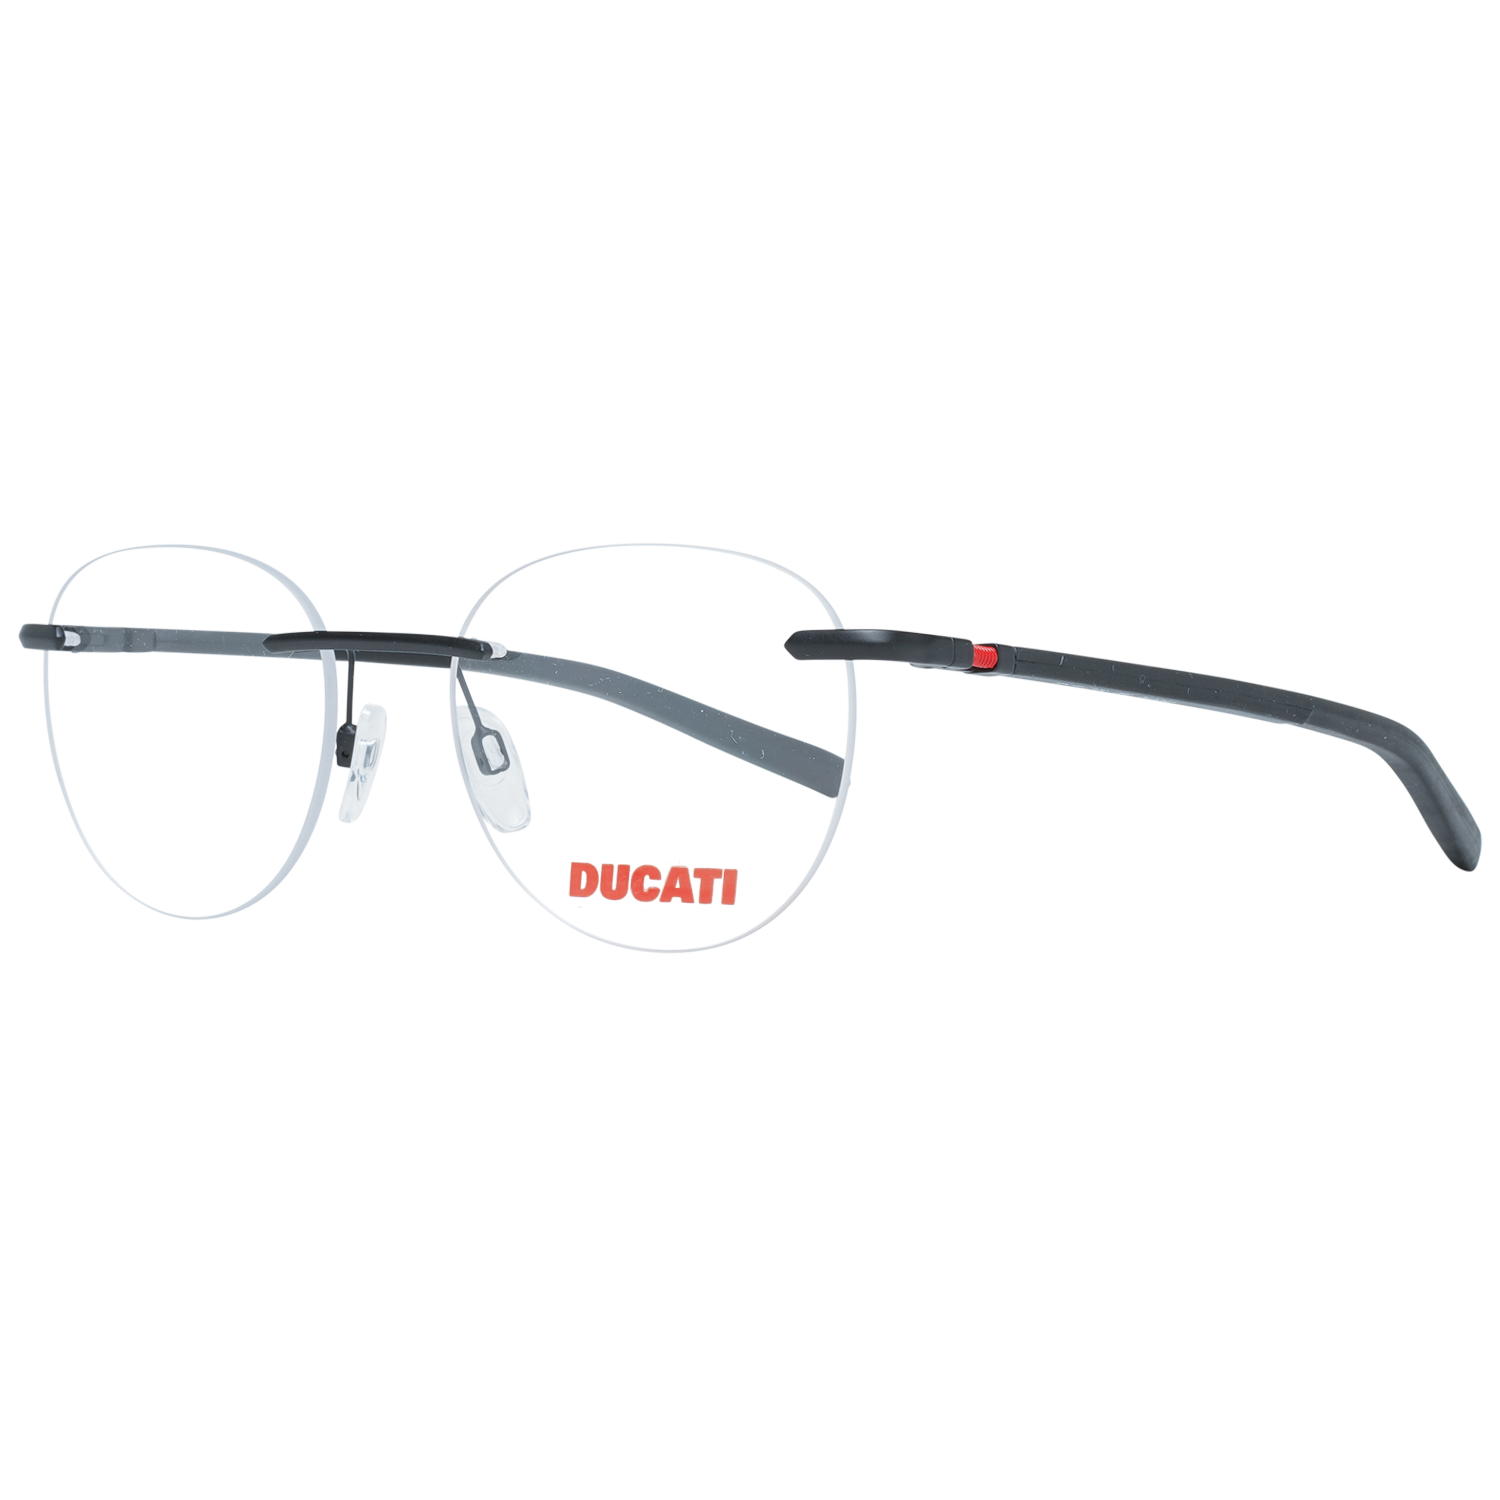 Ducati Frames Ducati Optical Frame DA3014 002 52 Eyeglasses Eyewear UK USA Australia 